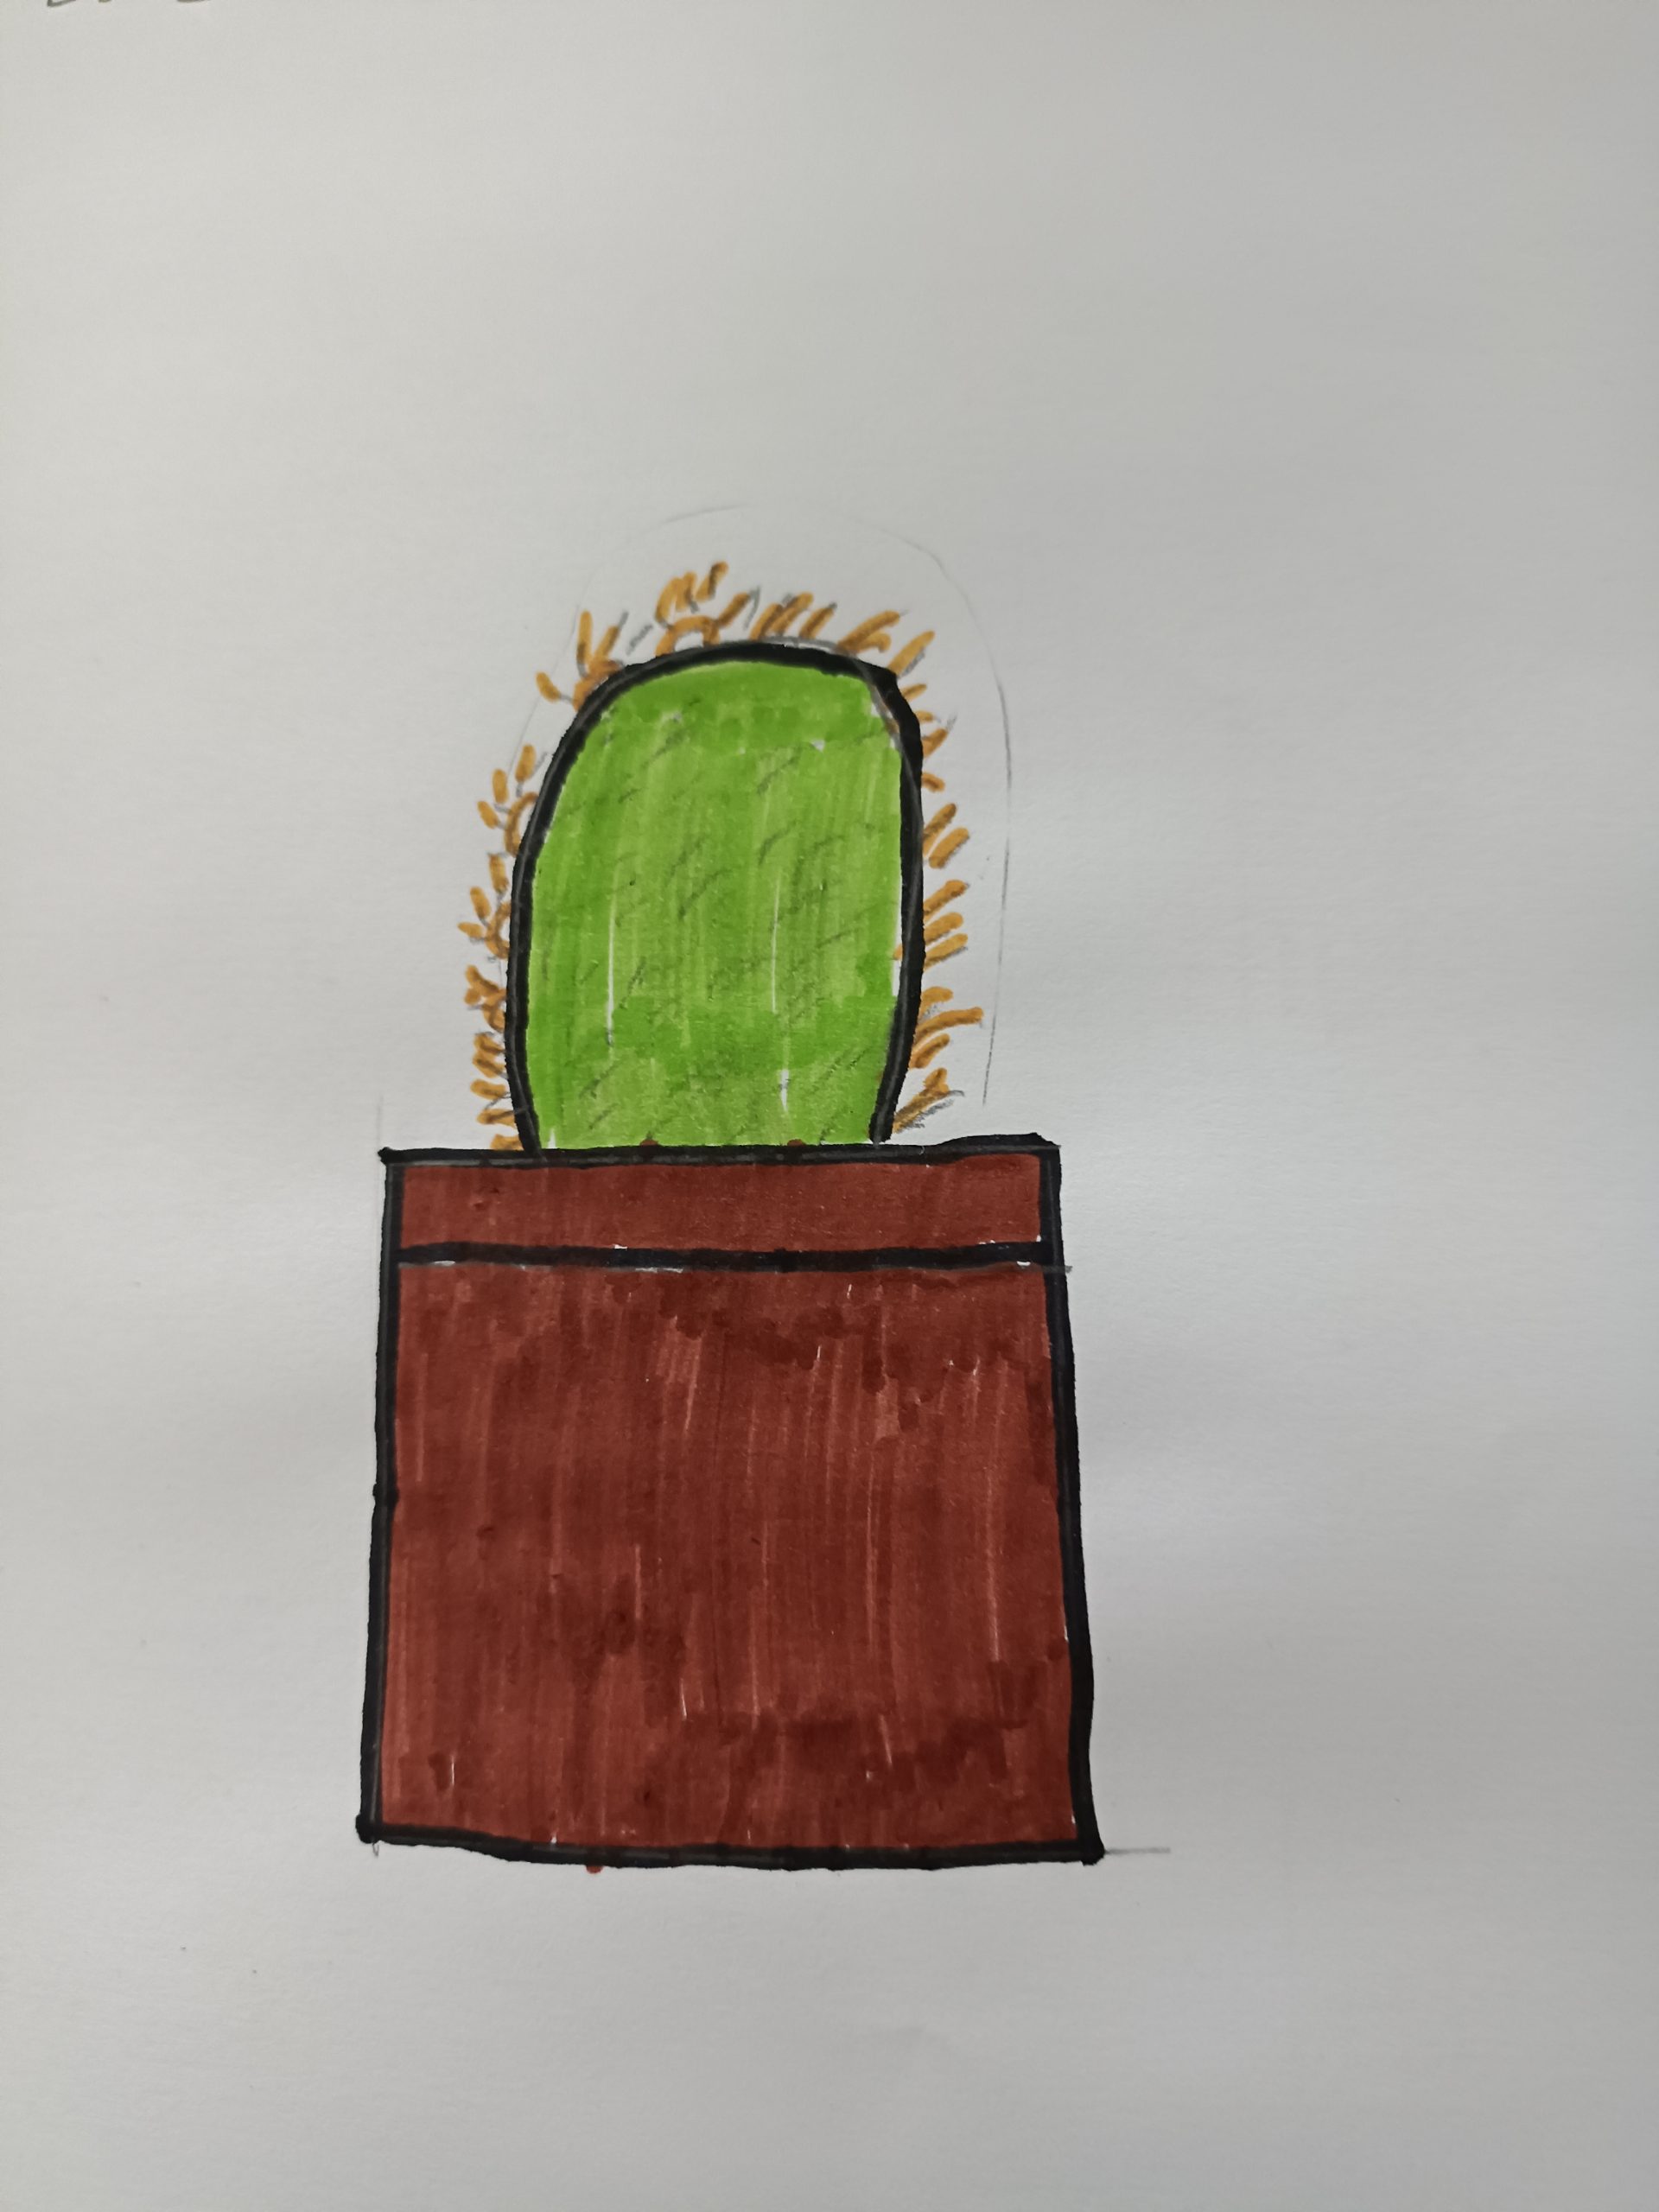 “Cactuslandia”